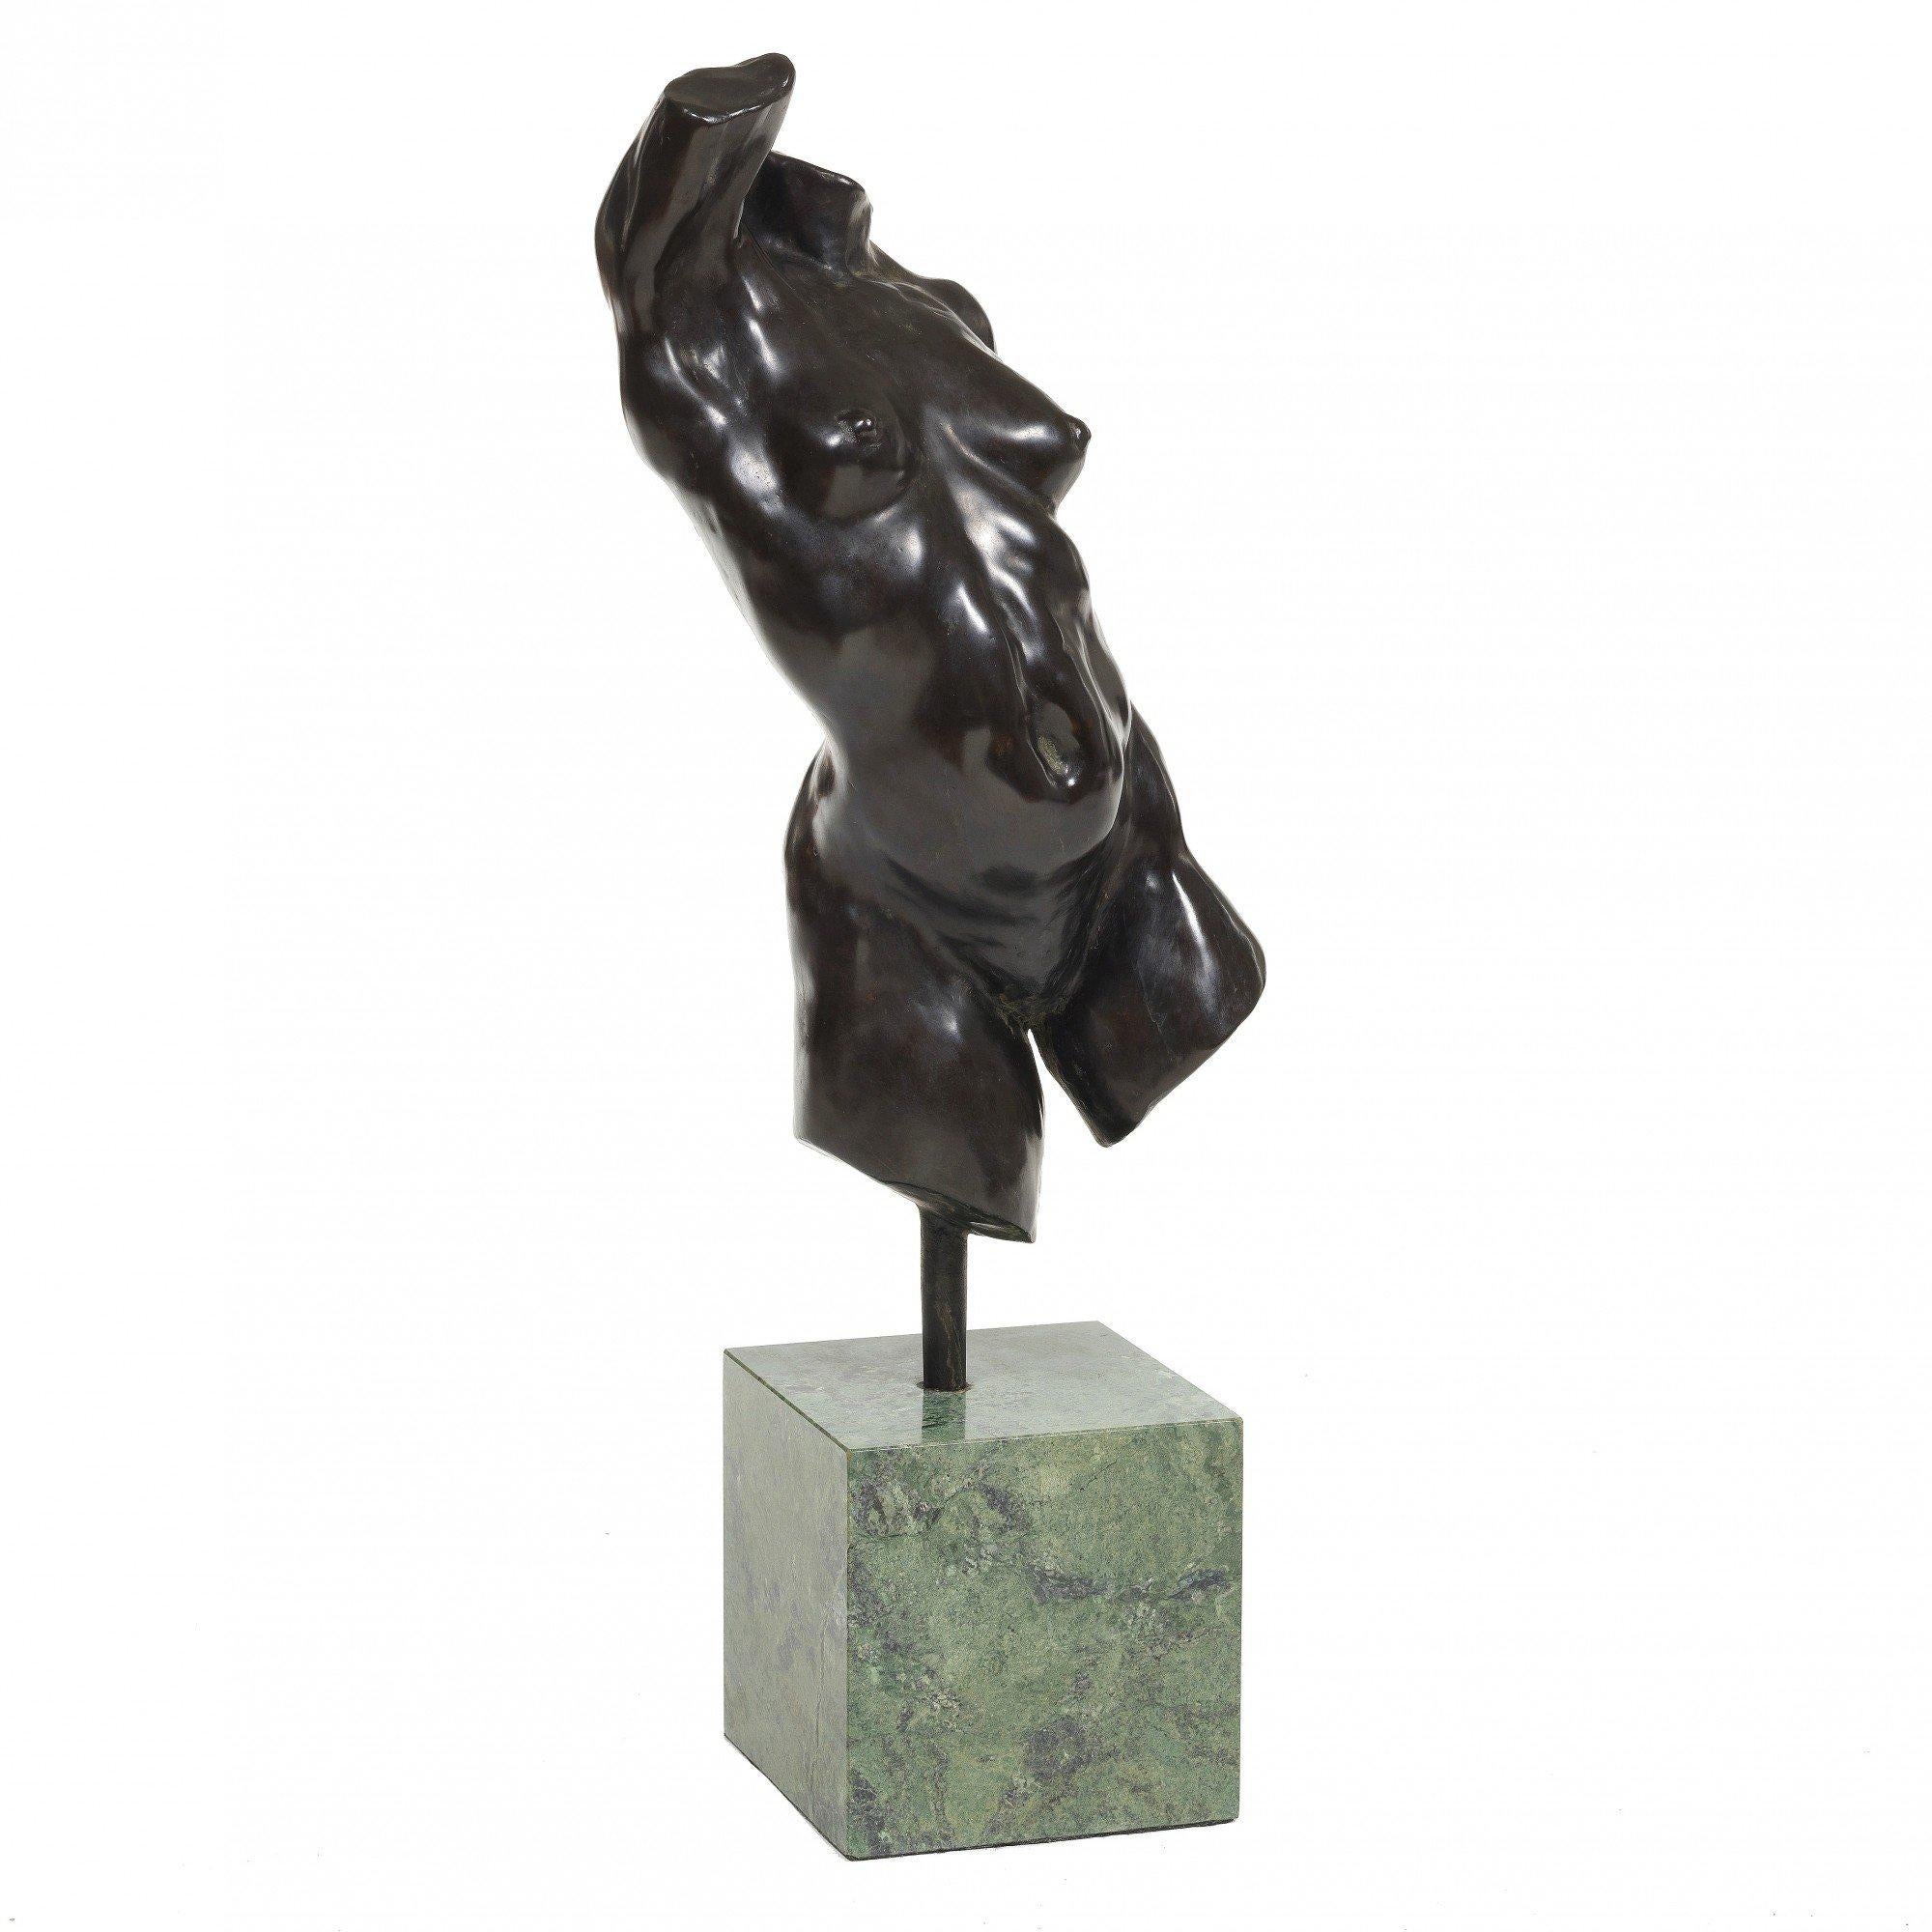 Nu féminin torse Sculpture en bronze, 20e siècle Artiste américain contemporain